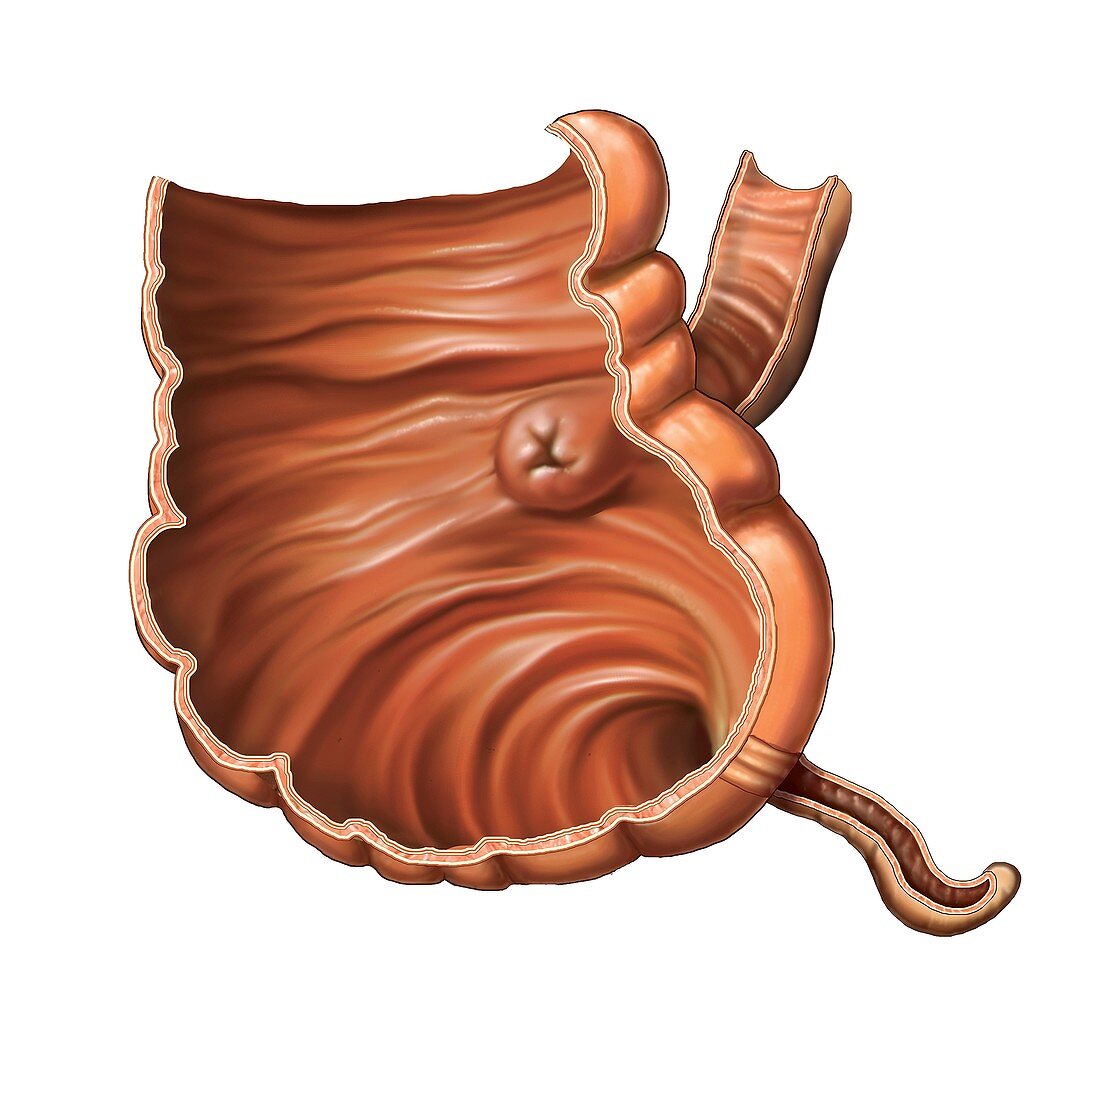 Small intestine,artwork